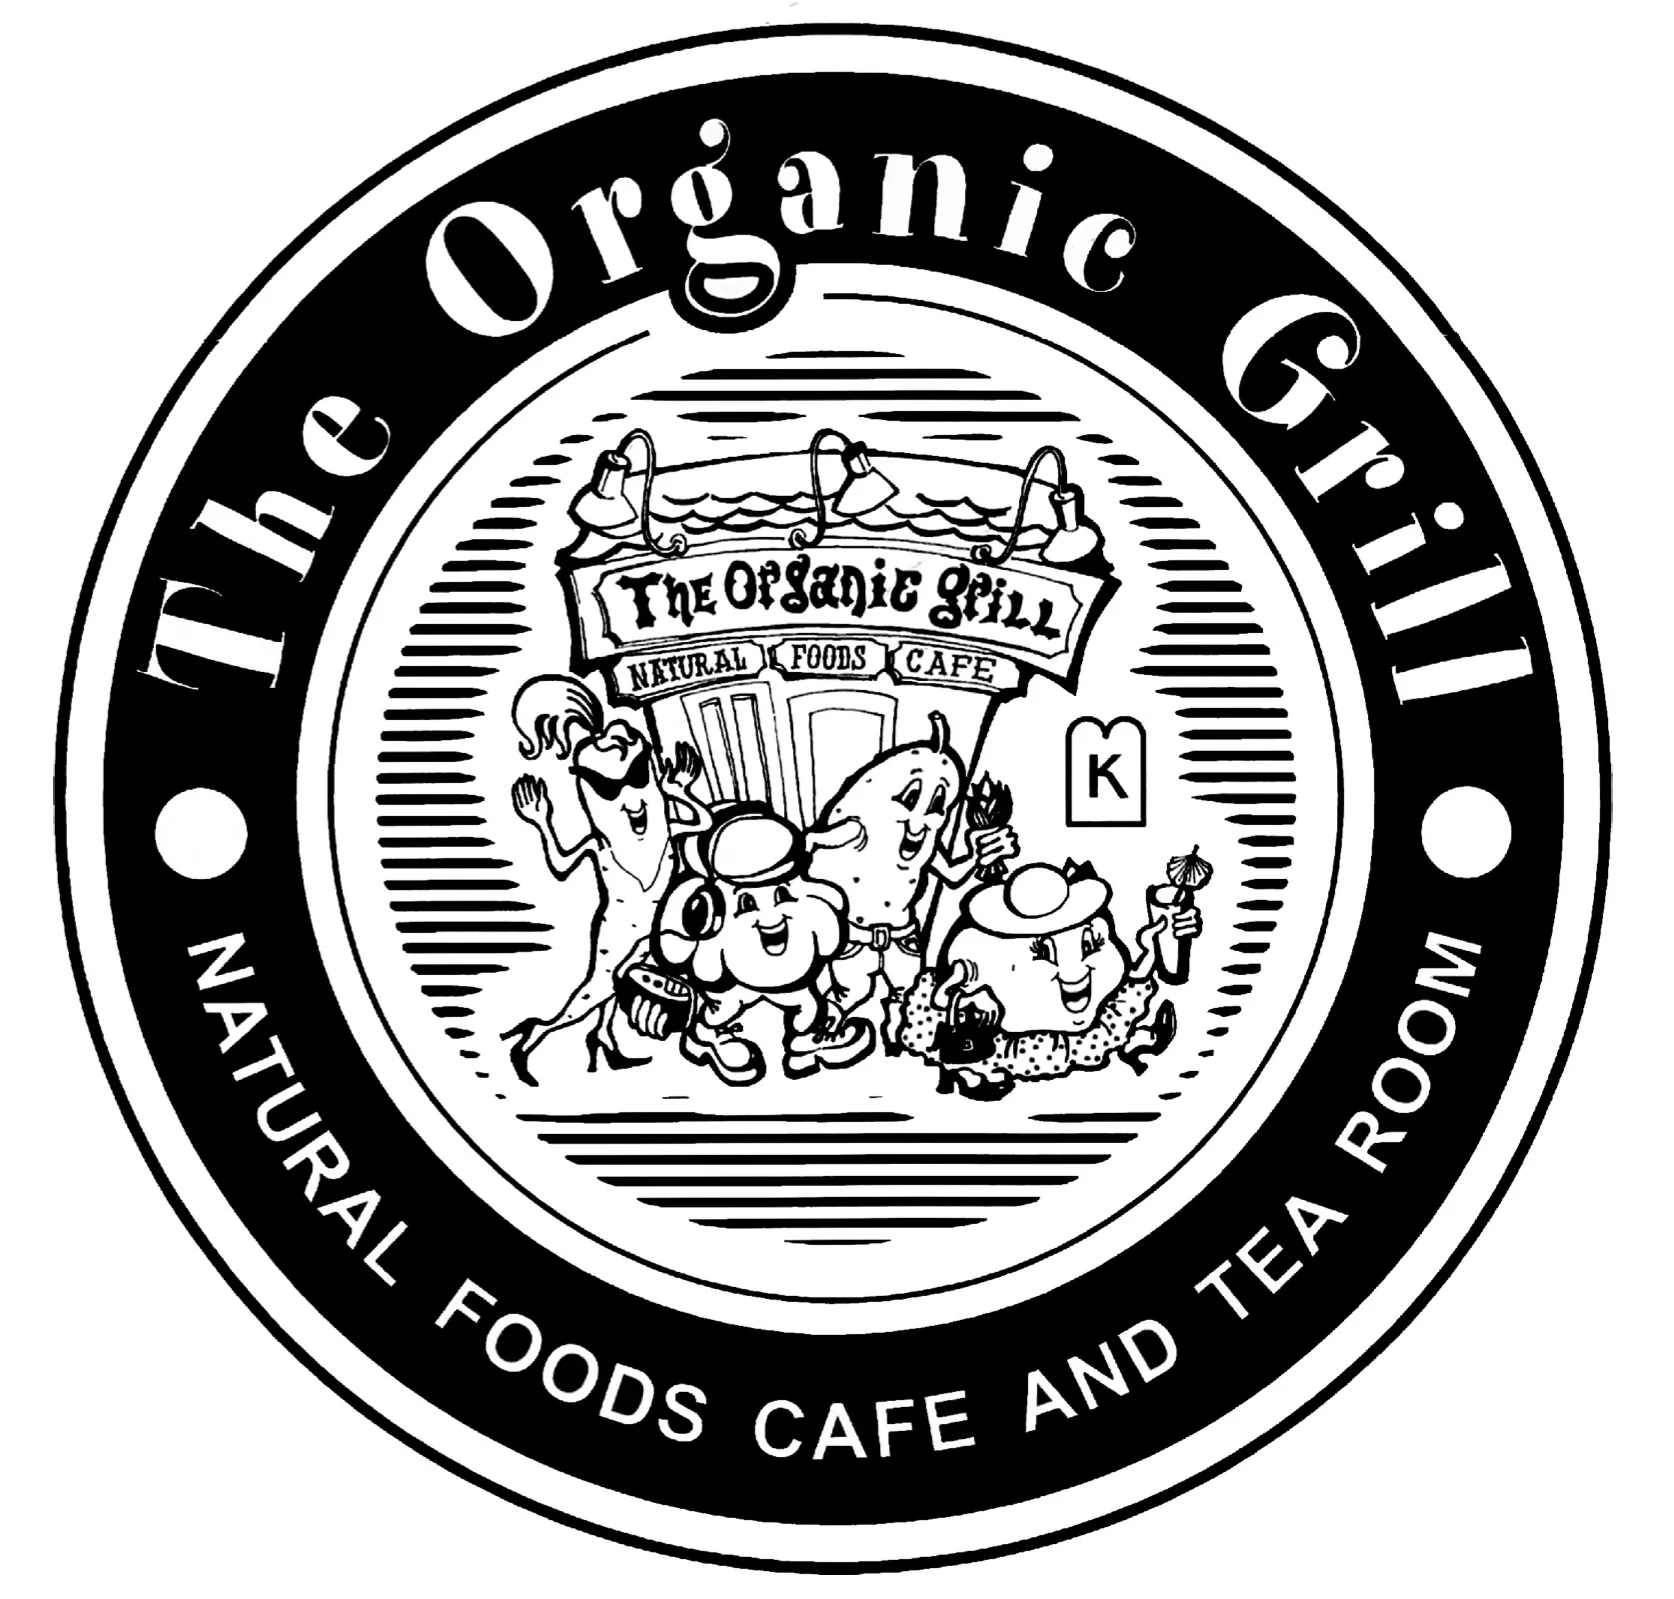 The Organic Grill New York